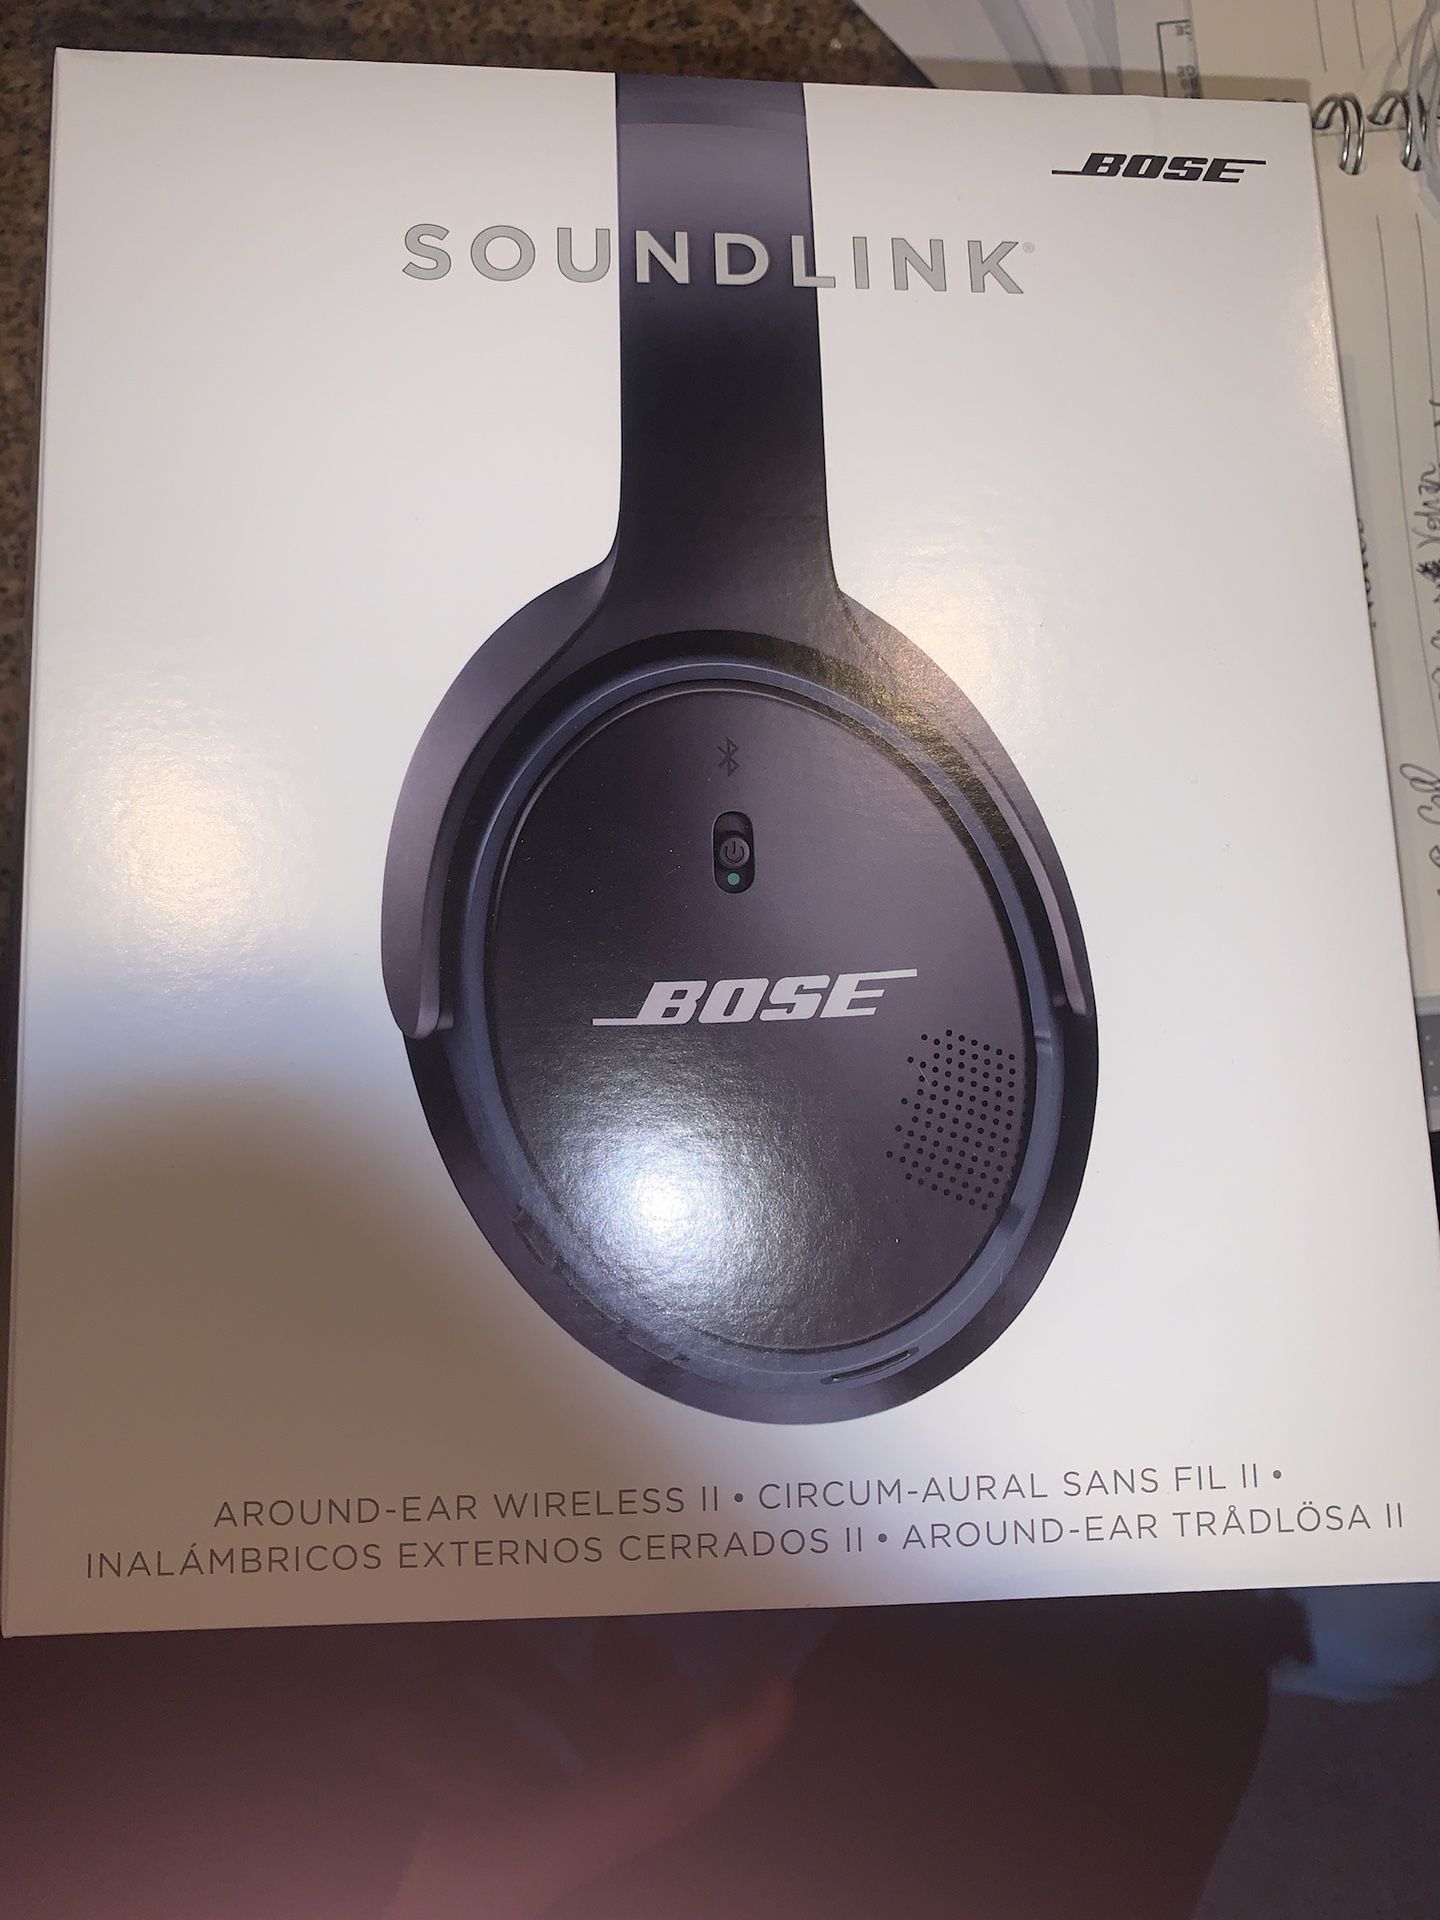 Brand new Bose around ear wireless 2 sound link headphones